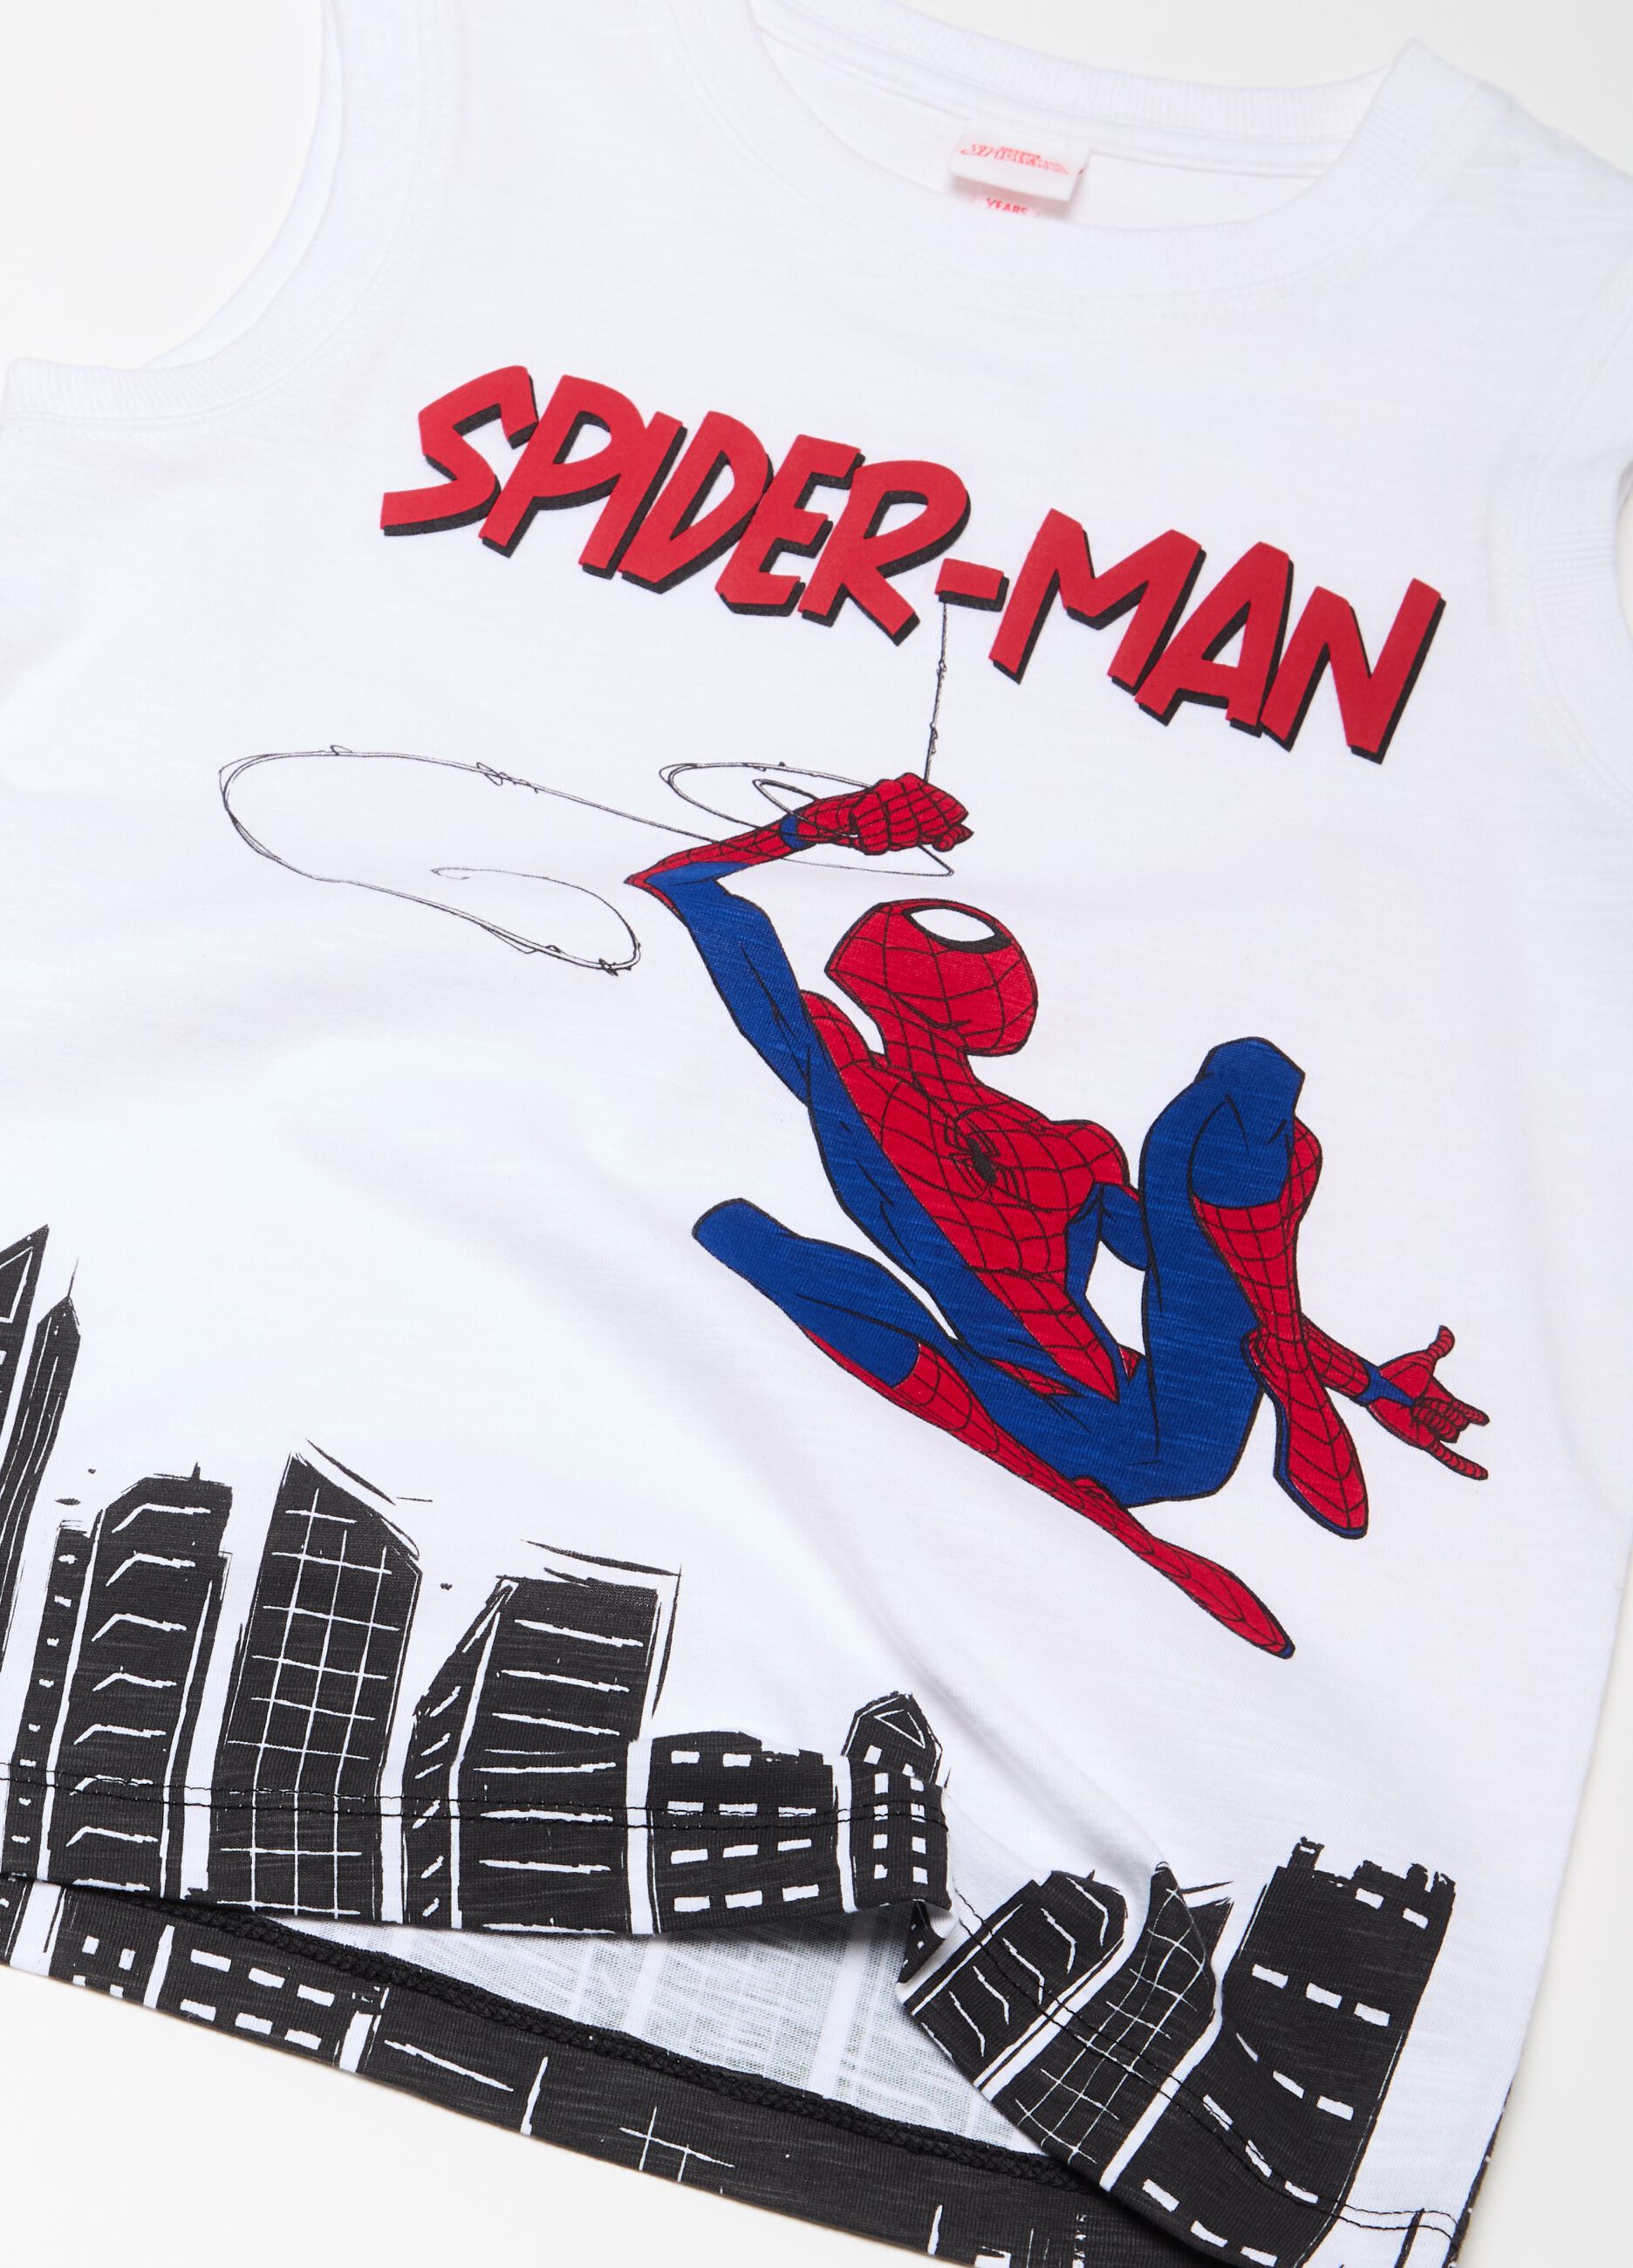 Racerback vest with Spider-Man print